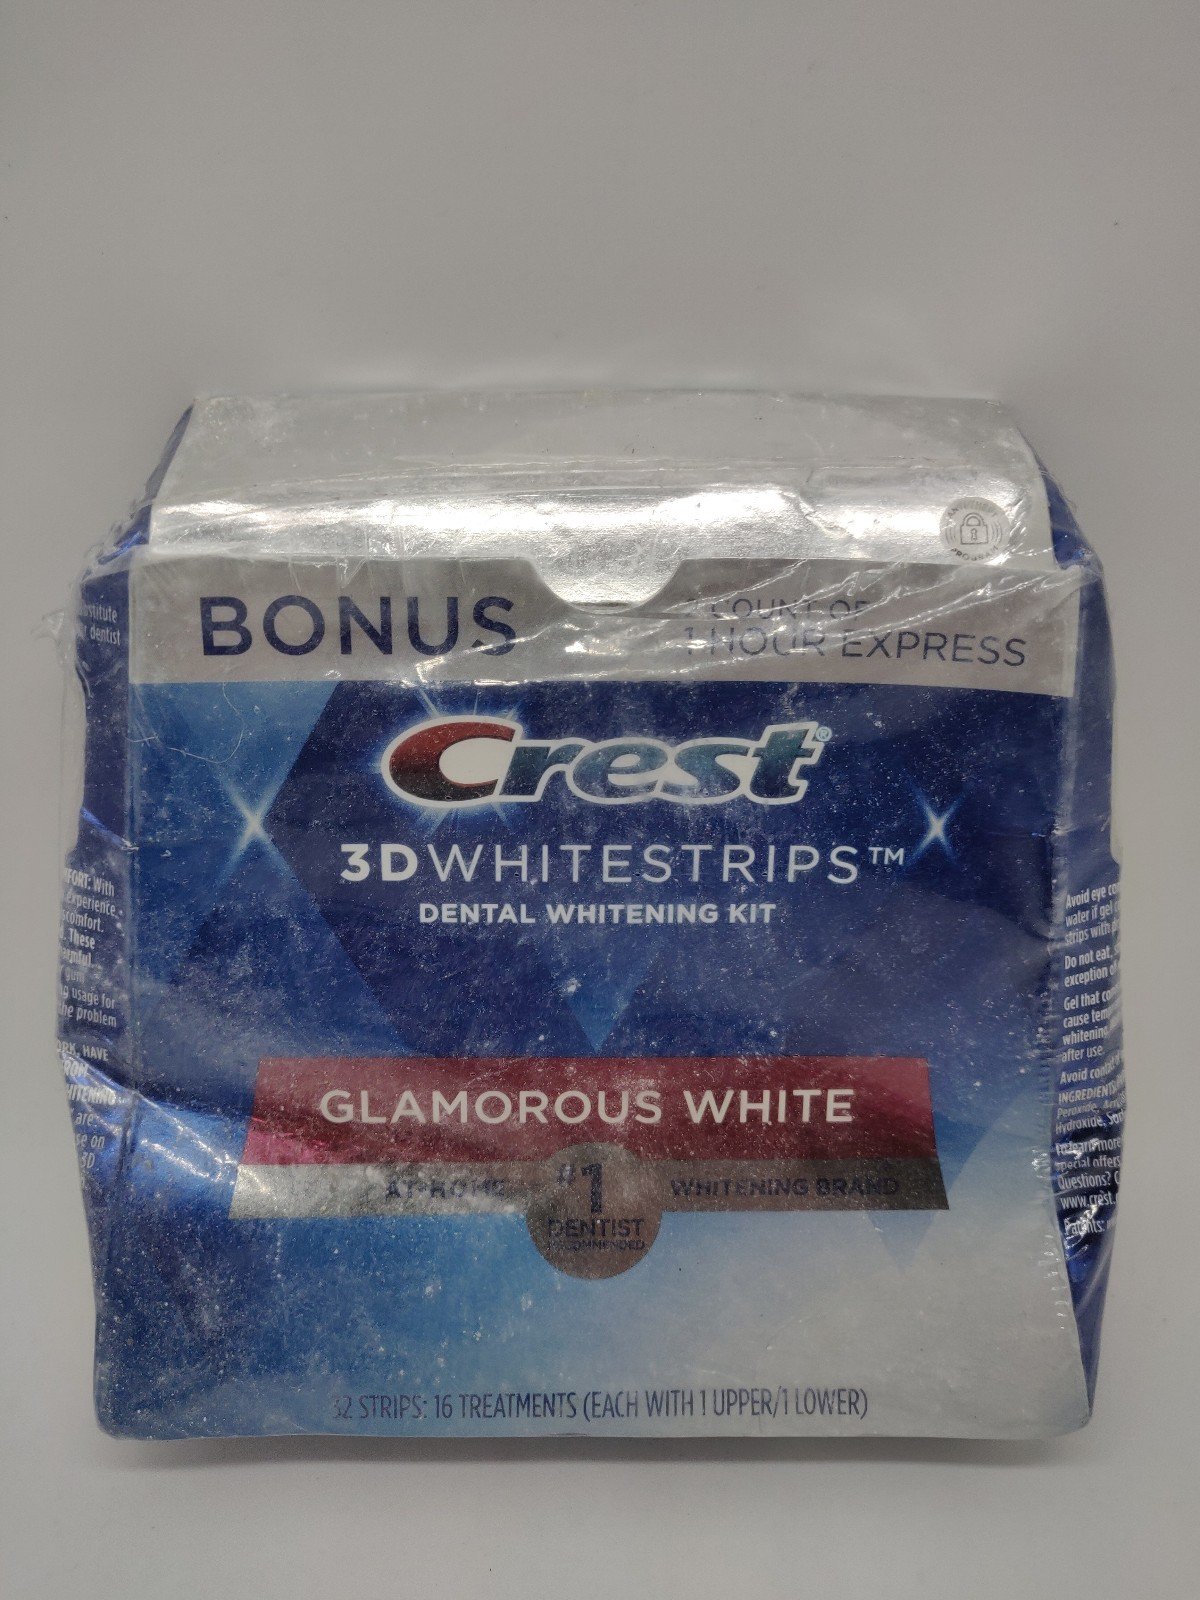 LOT OF 16 pairs - Crest 3D Whitestrips -Glamorous White